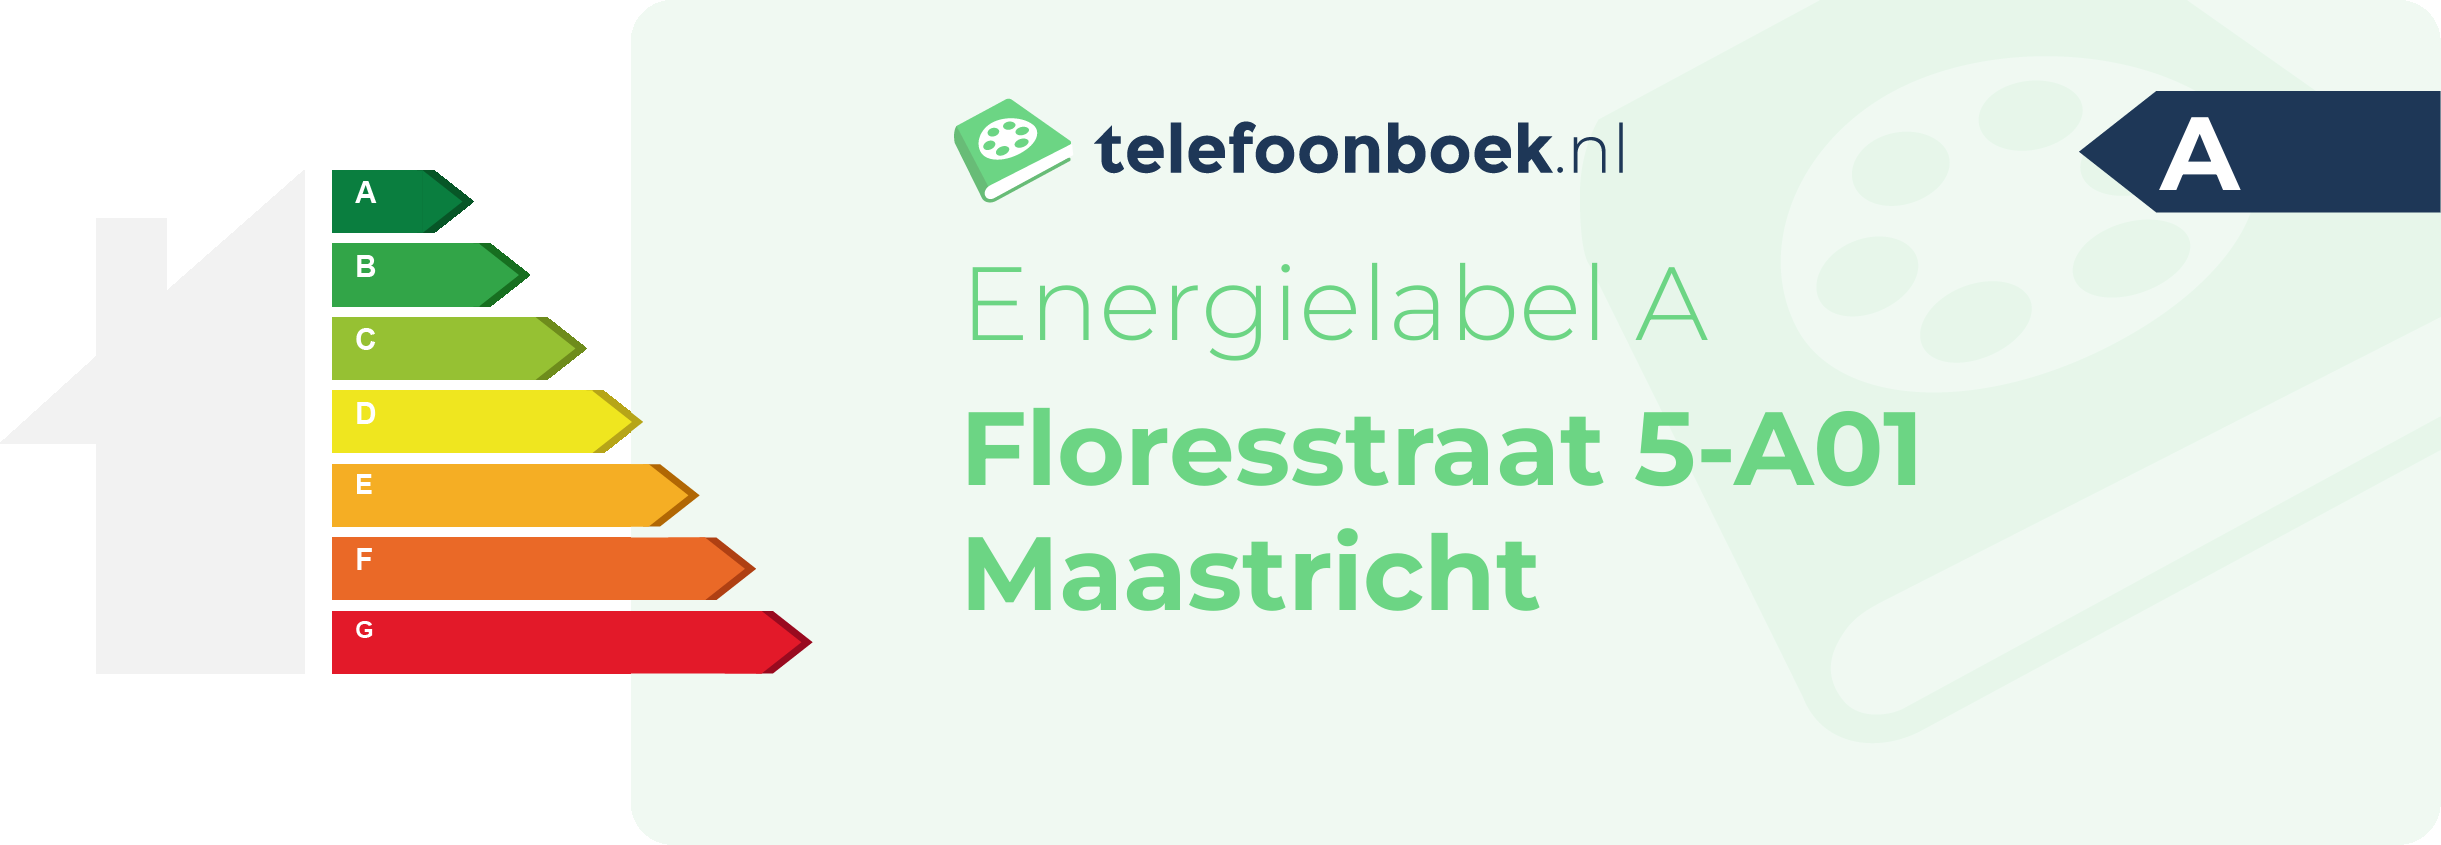 Energielabel Floresstraat 5-A01 Maastricht